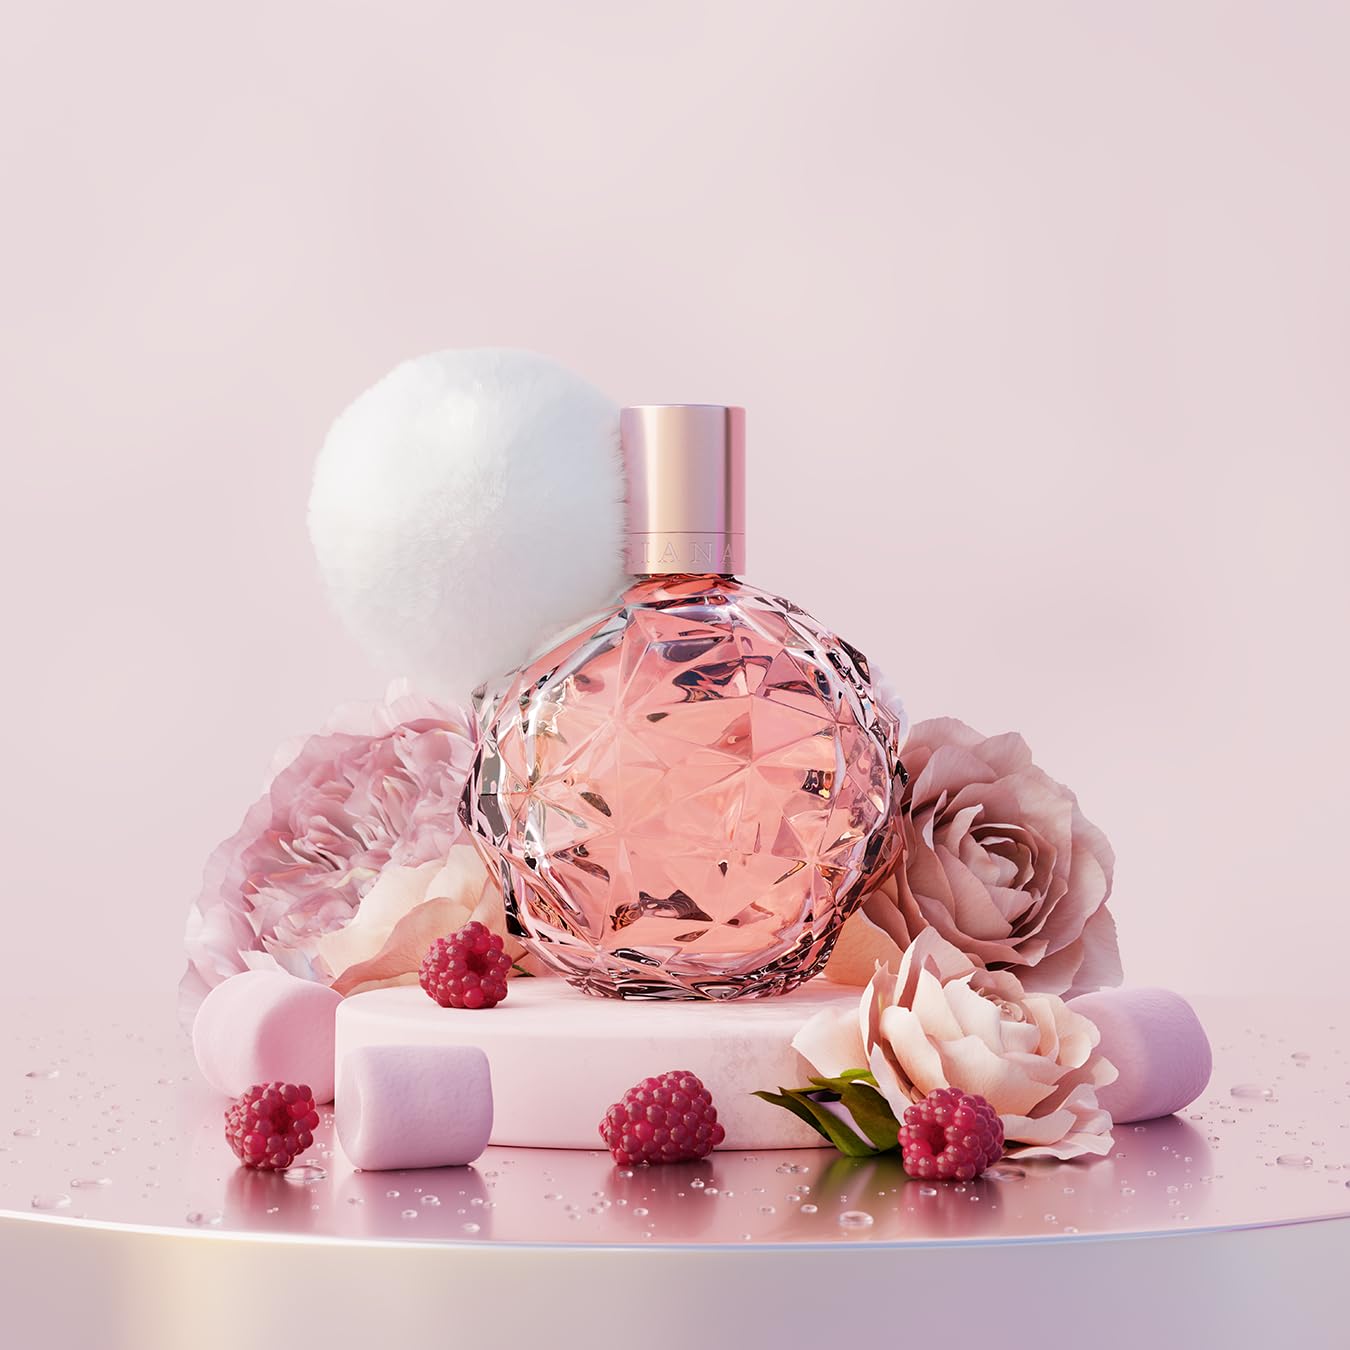 Ari By Ariana Grande Eau De Parfume Spray 3.4 Oz / 100 Ml for Women